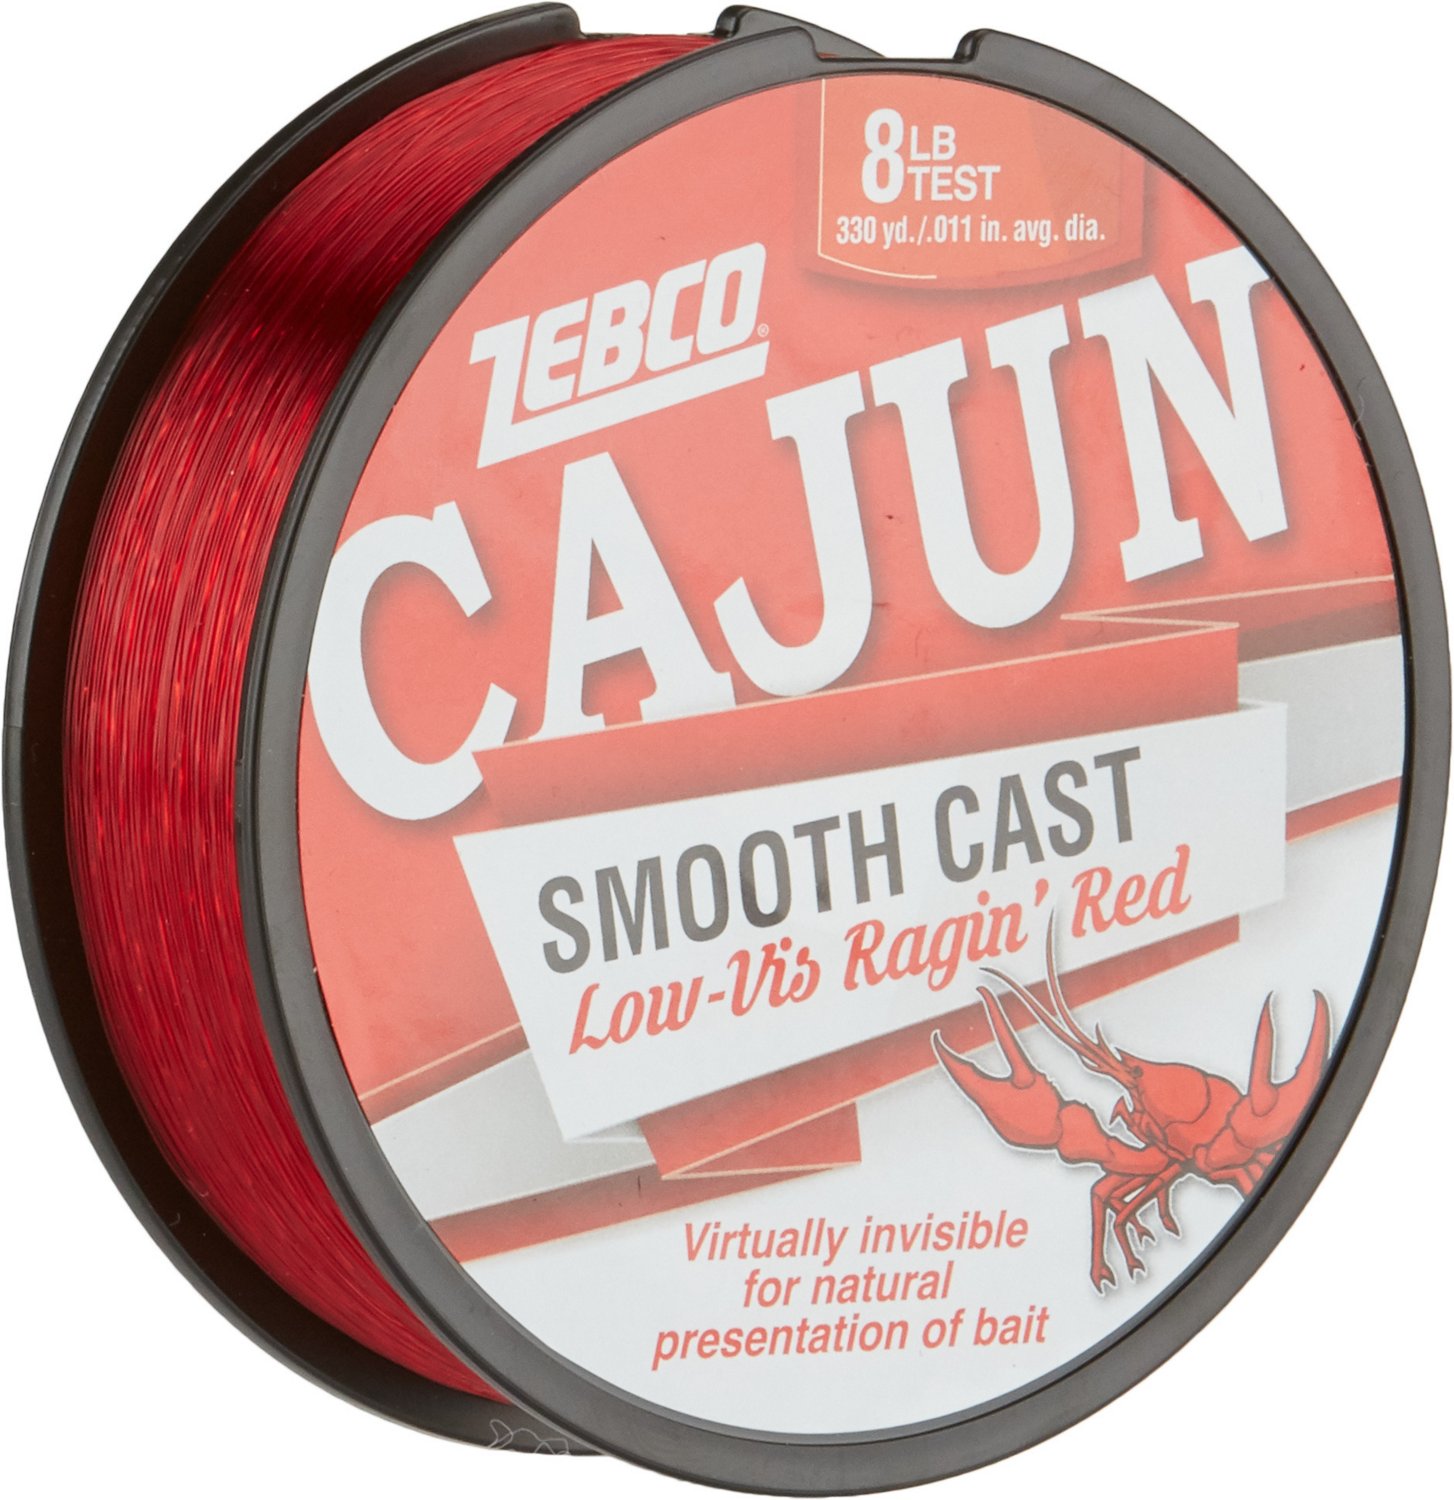 CAJUN LOW-VIS RAGIN' RED Fishing Line 12lb-1150yd 1/4LB SPOOL #CLLOWVISQ12C 